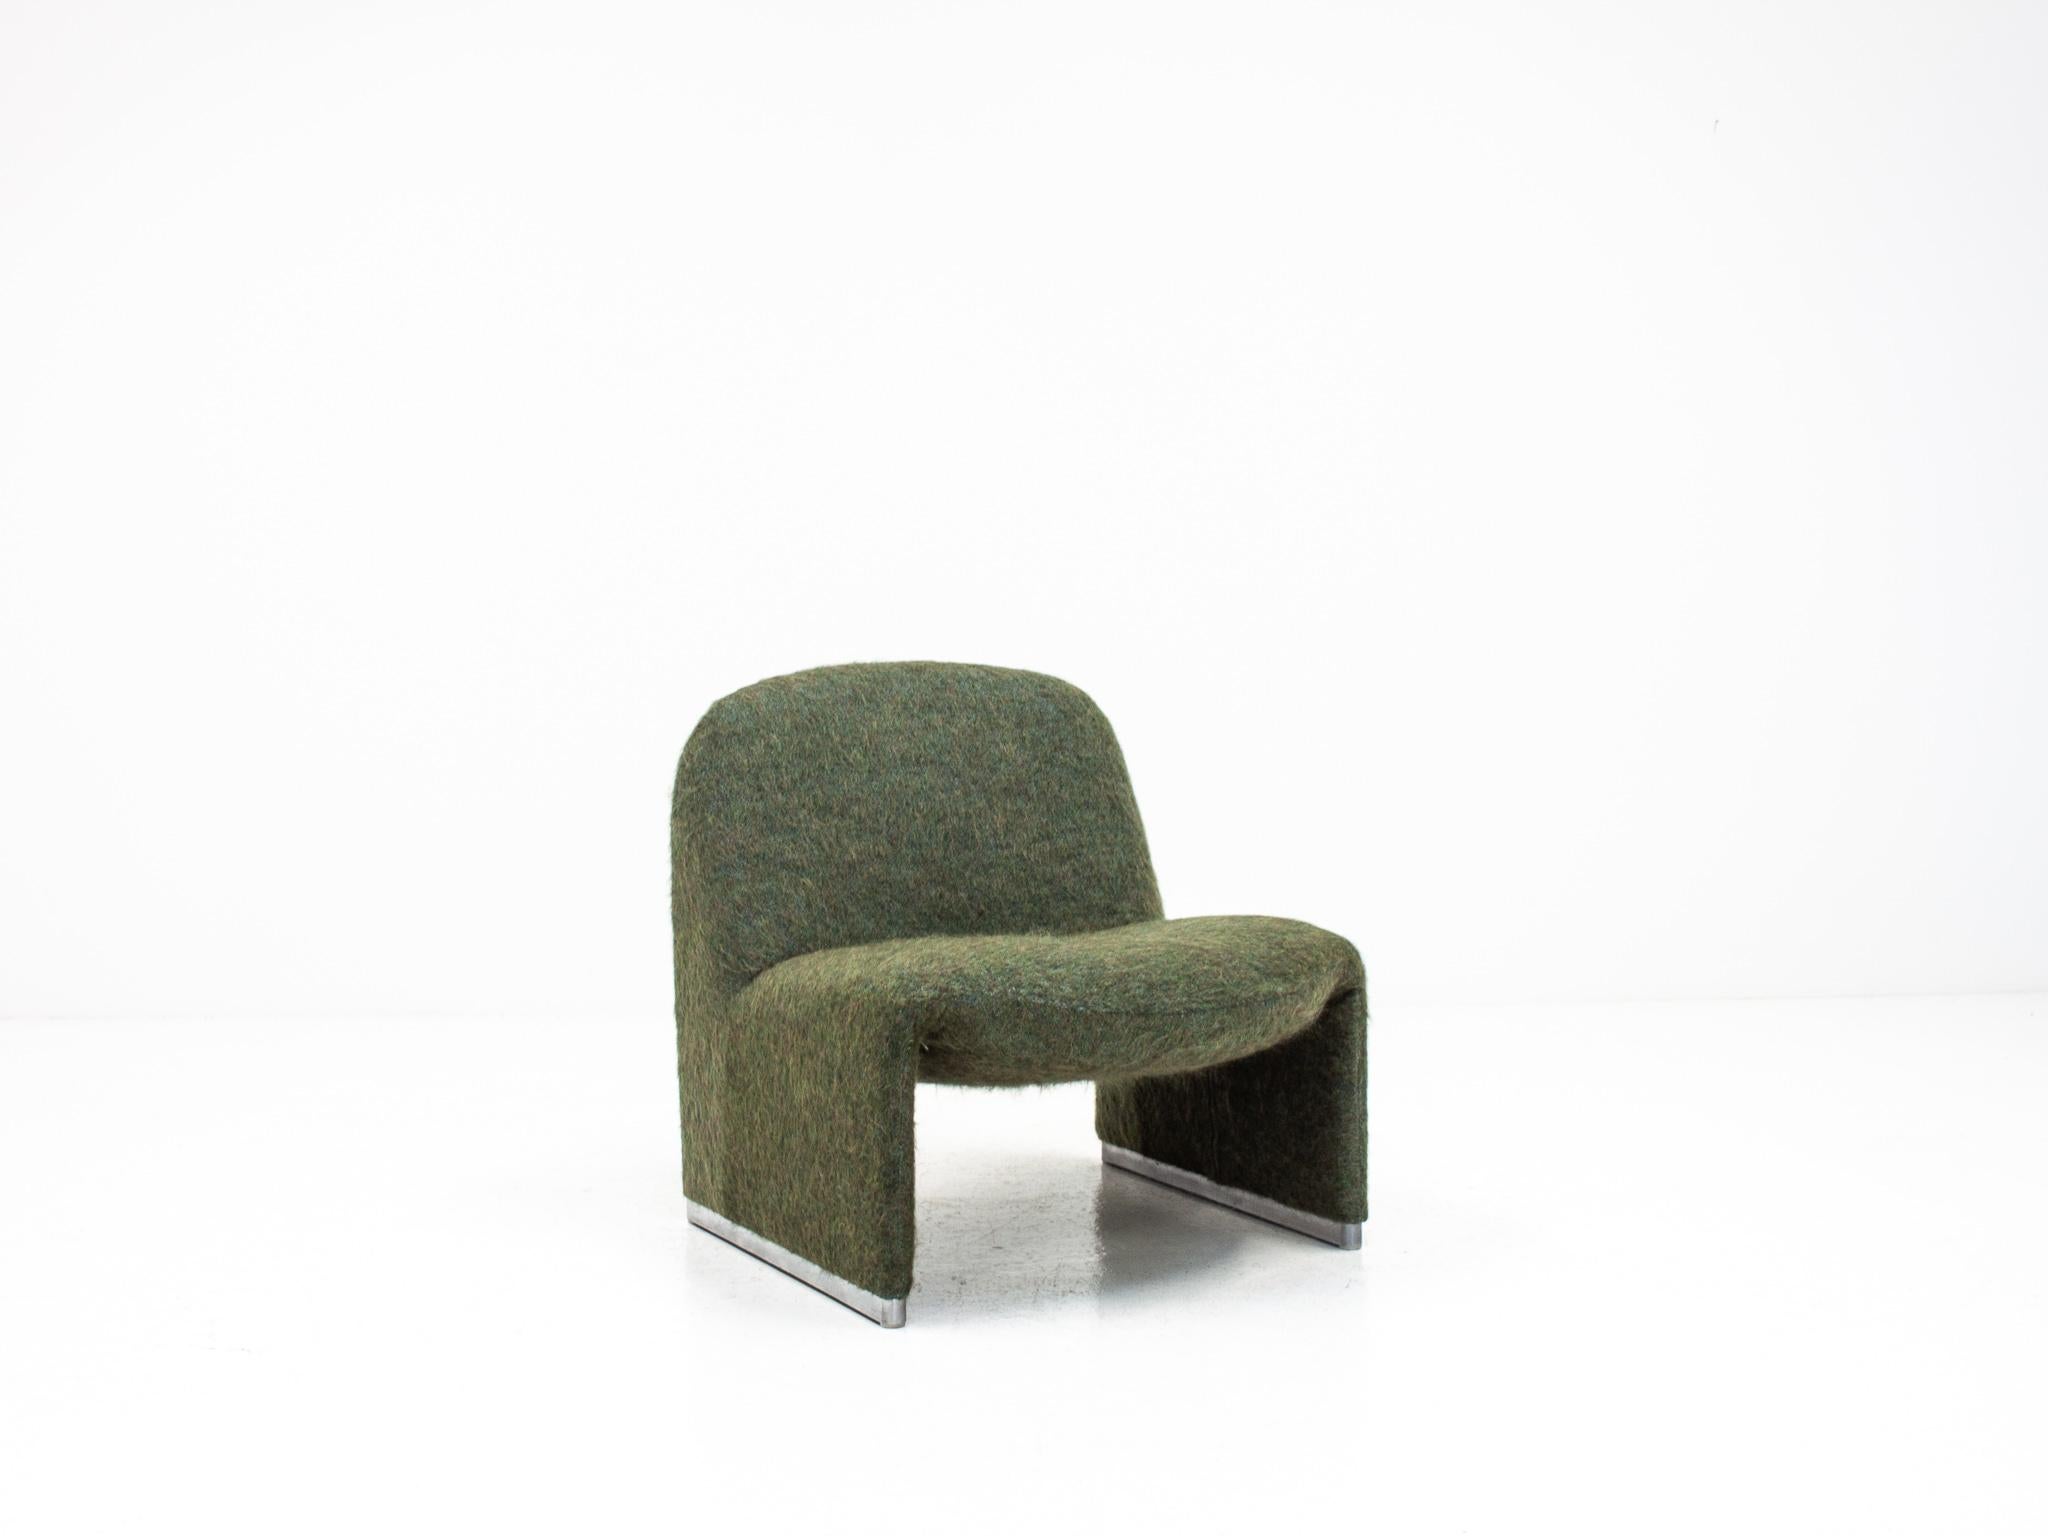 Steel A Giancarlo Piretti “Alky” Chair In Fluffy Pierre Frey, Artifort *Customizable*